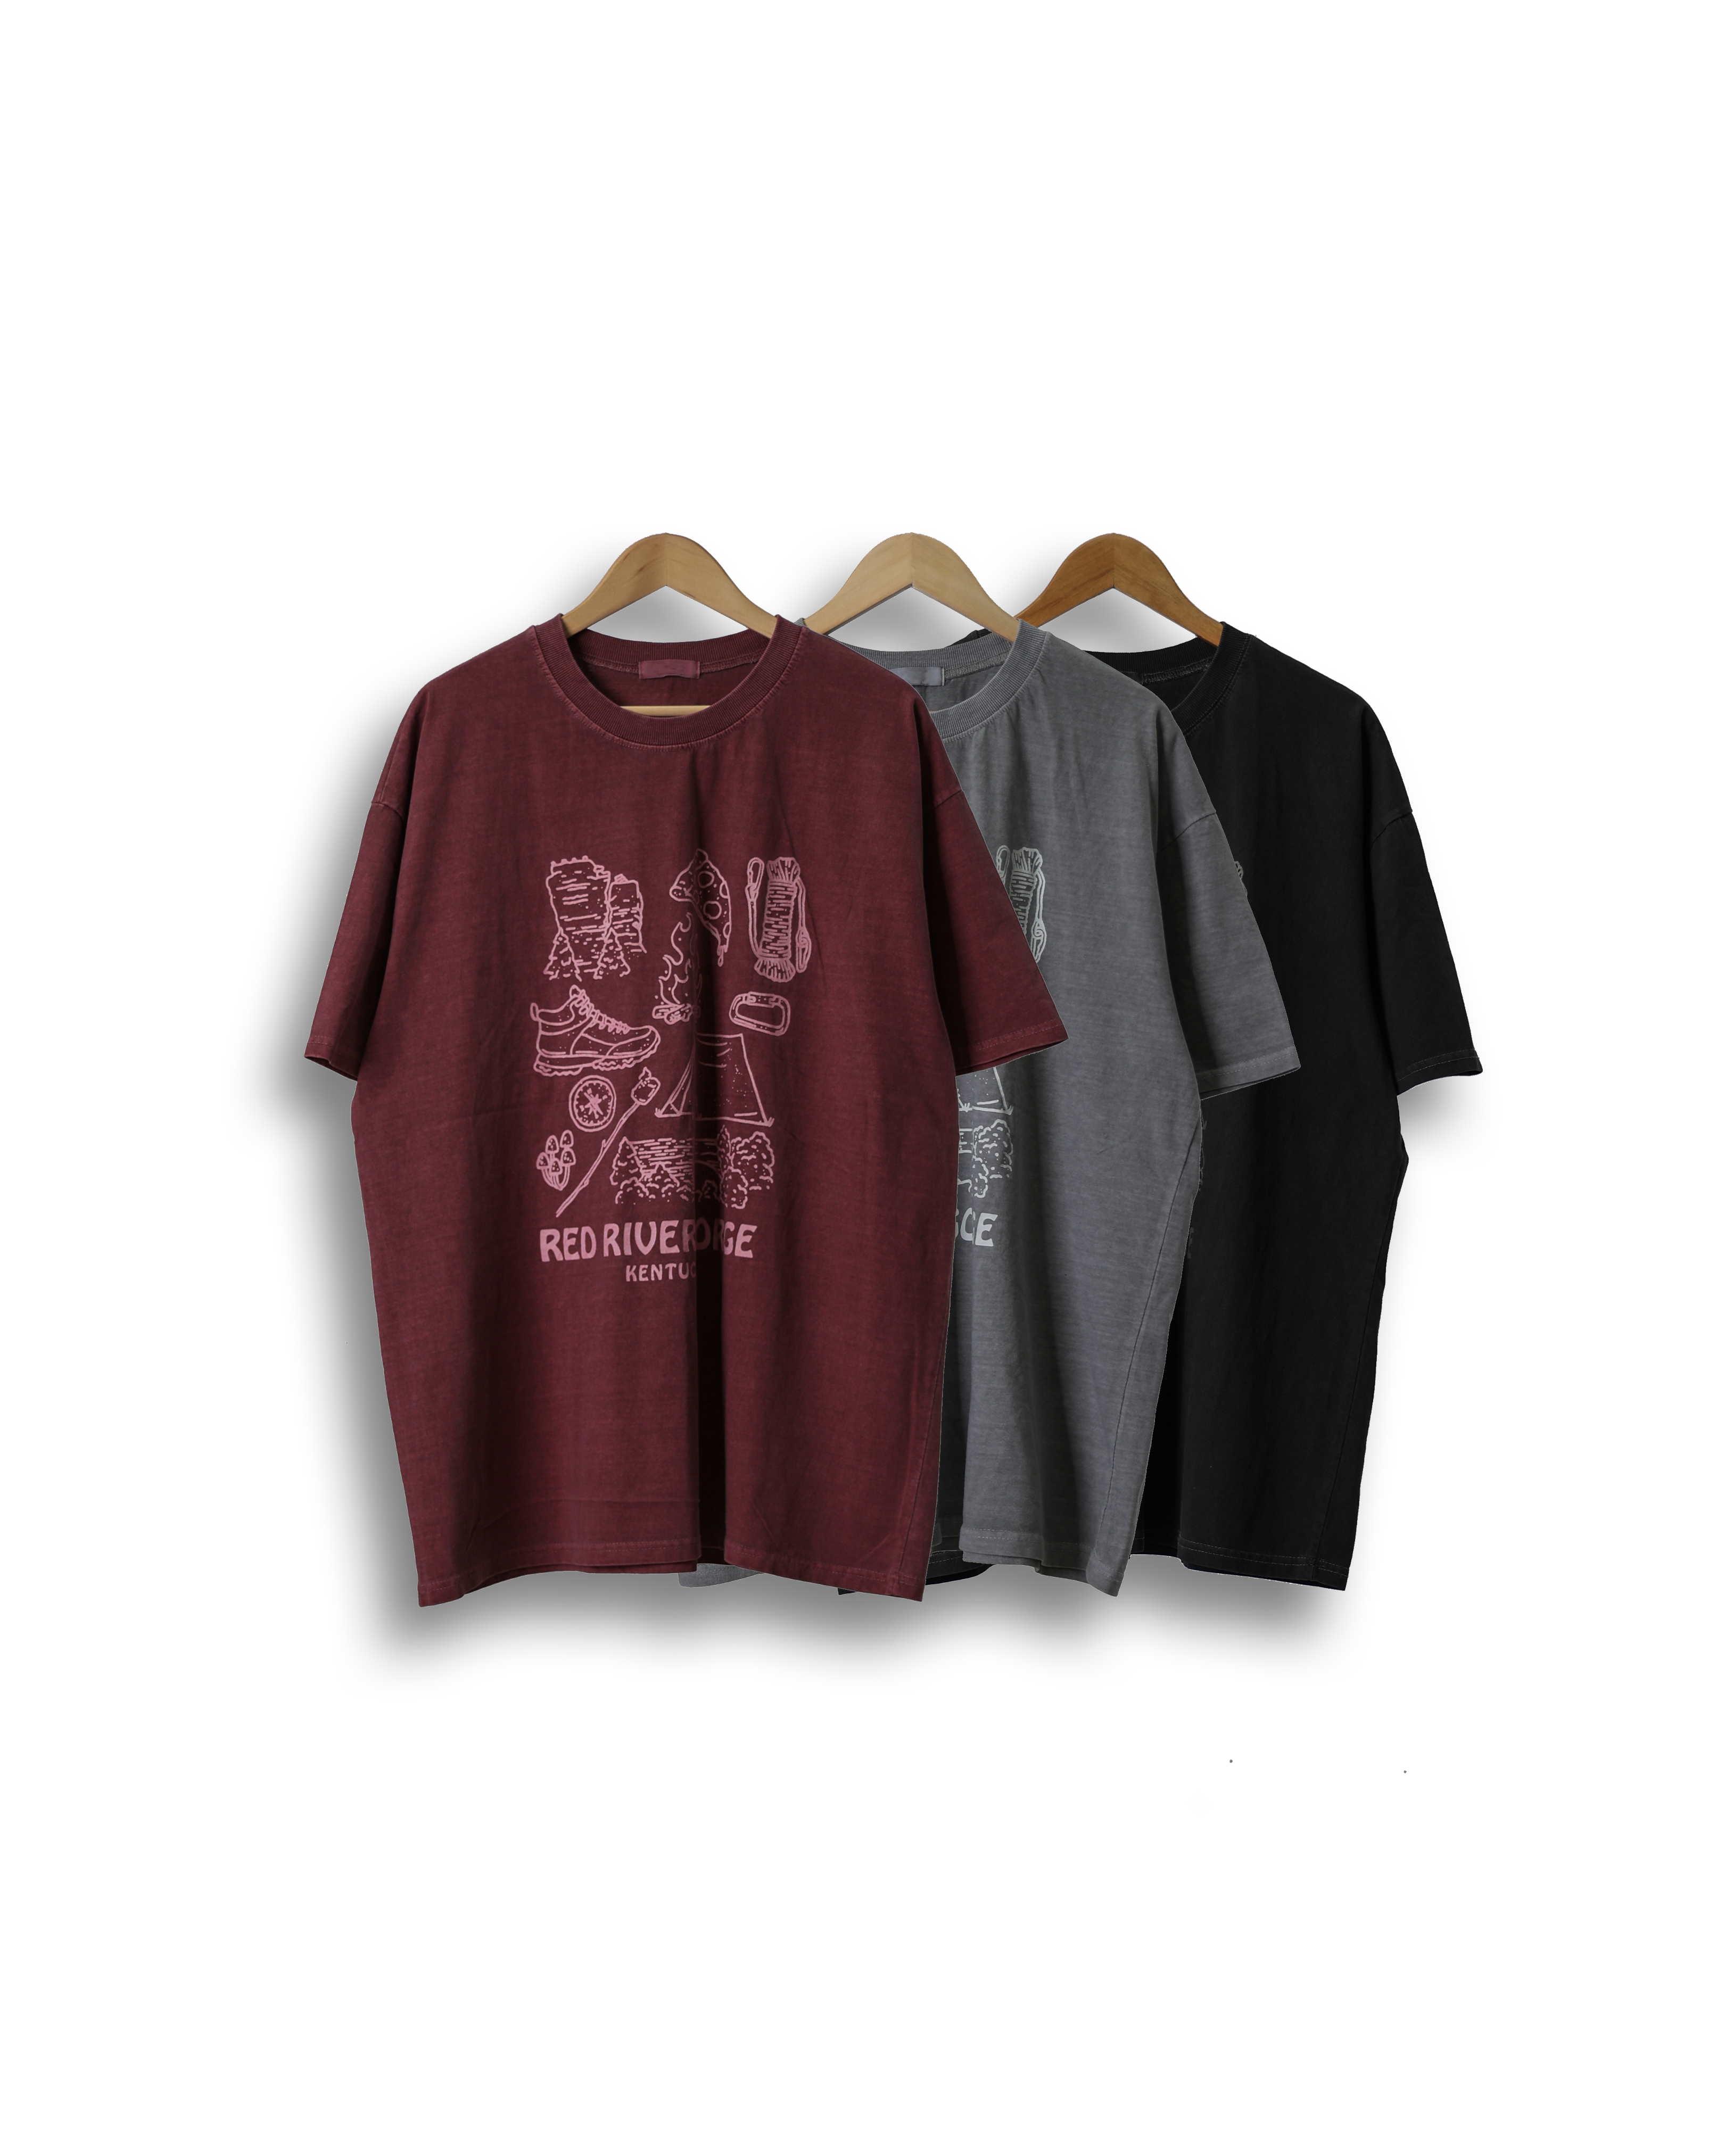 YOXF Pigment Camping ICON T Shirts (Charcoal/Gray/Burgundy)